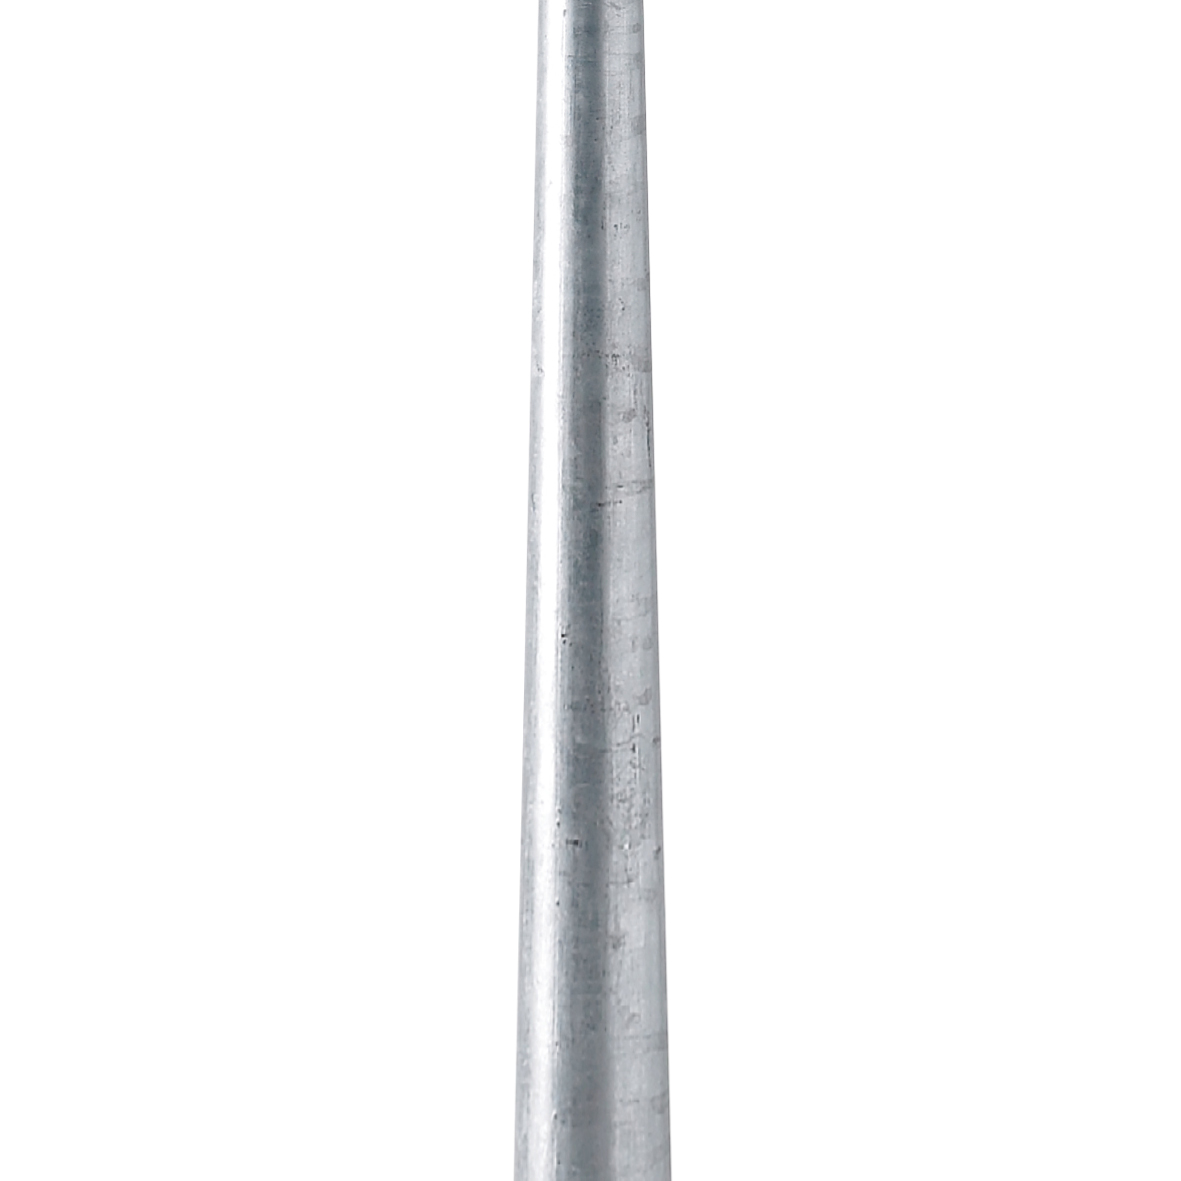 Wax Galvanized Pole conical 6m Steel